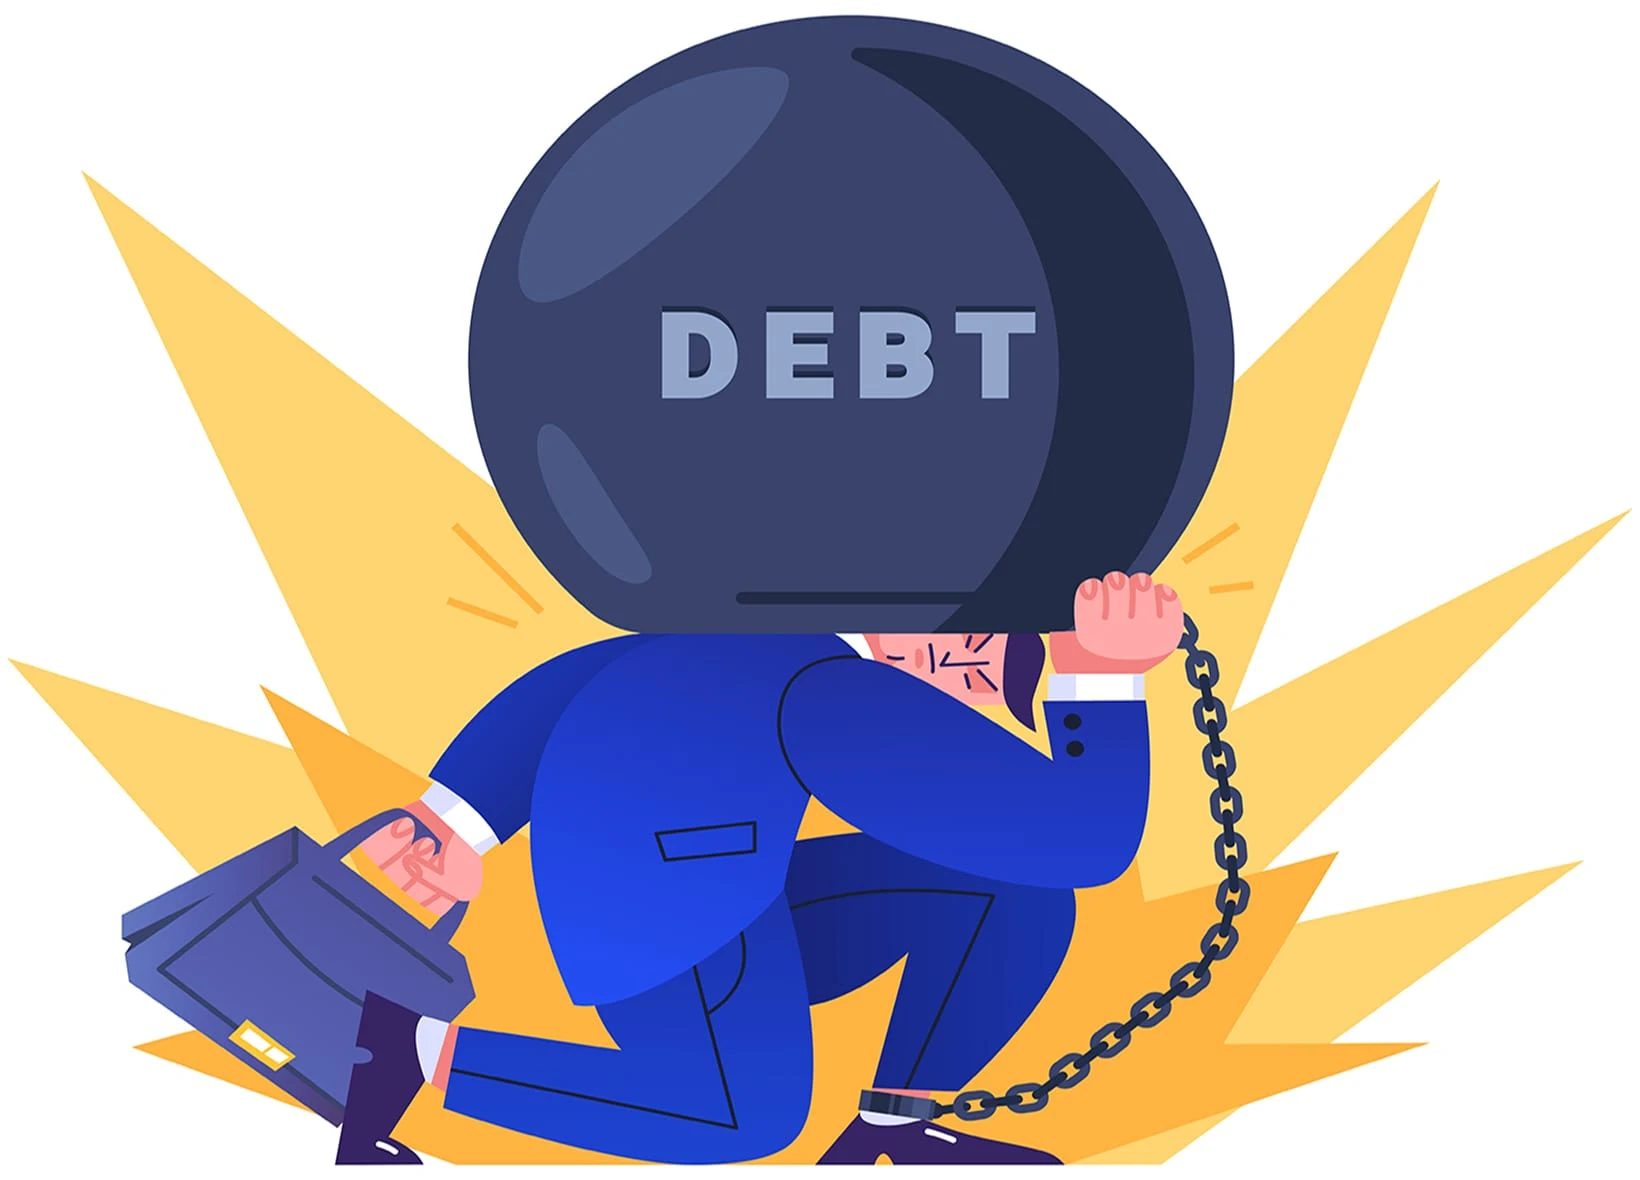 Debt and Money Management - Differences Between Men and Women - FLASHDEALS4U